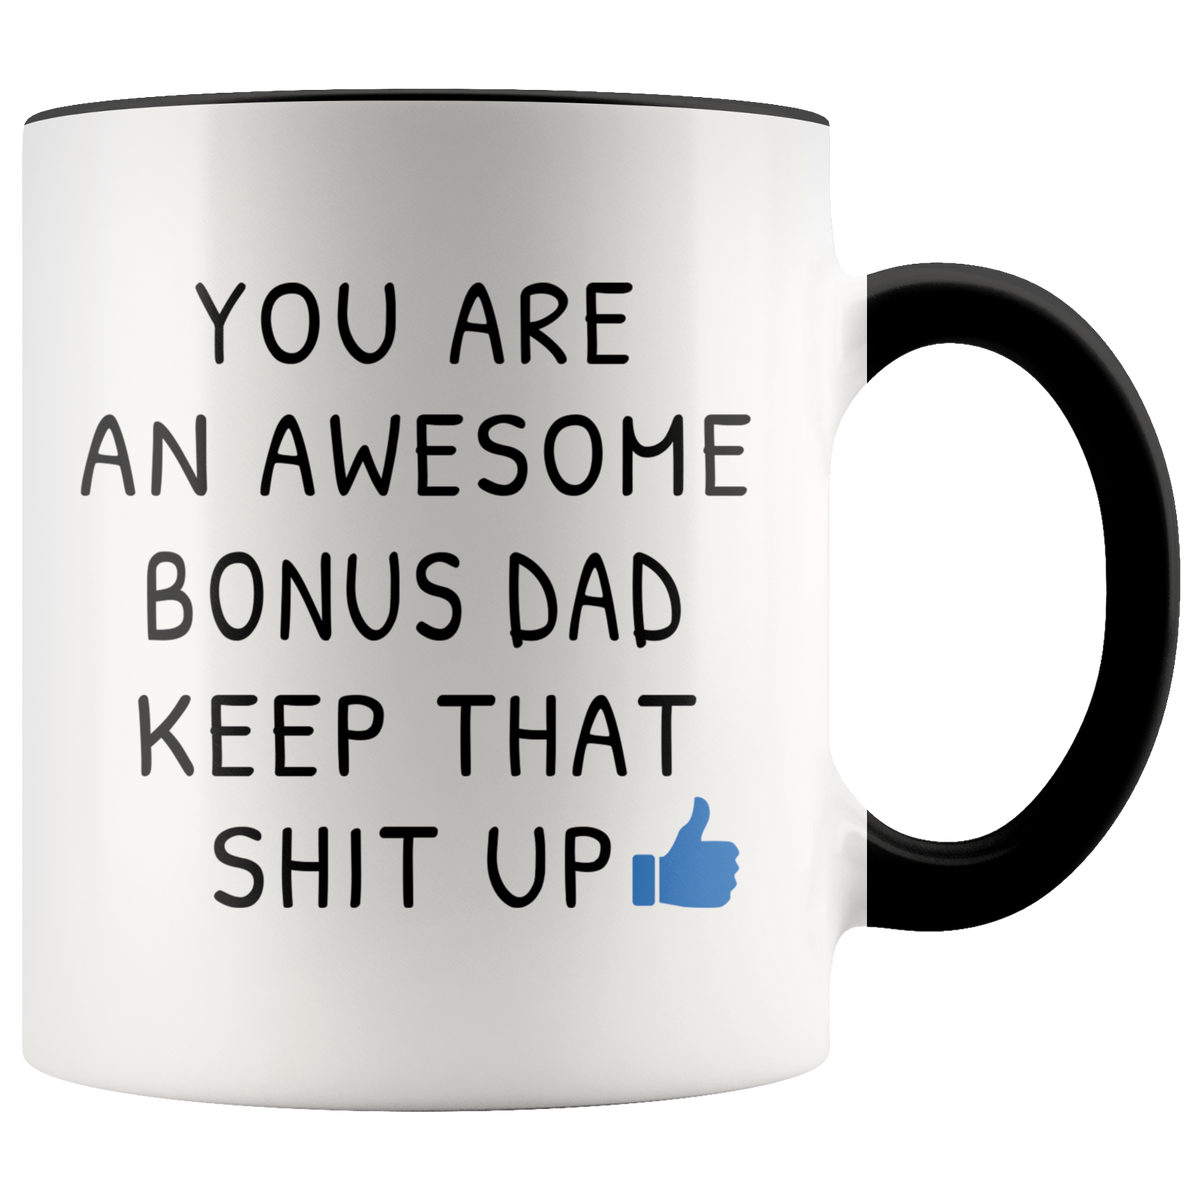 Funny Gift For Bonus Dad - You Are An Awesome Bonus Dad Accent Coffee Mug 11oz (black)